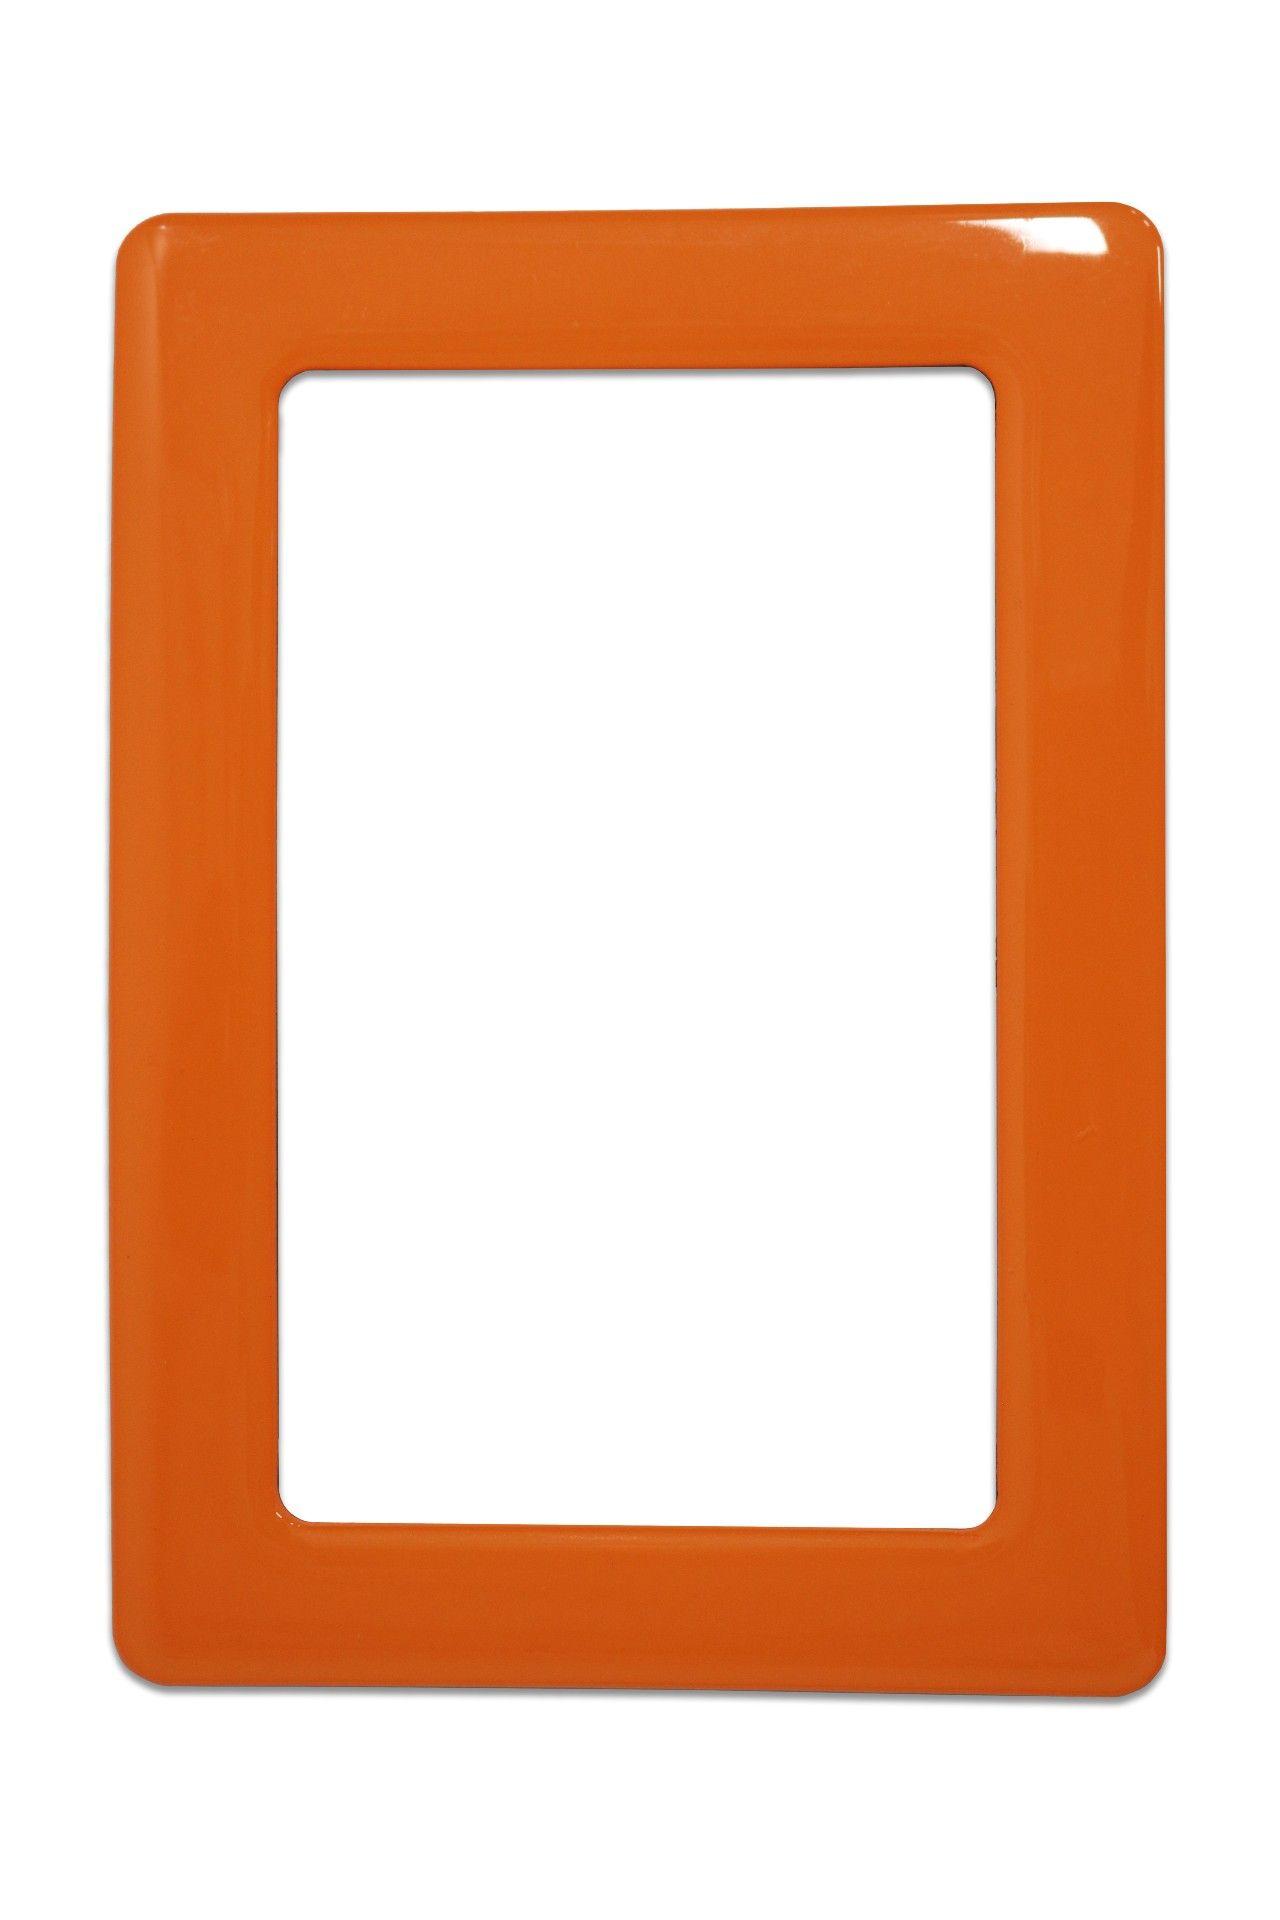 Magnetic self-adhesive frame size 12.3x8.1cm - orange